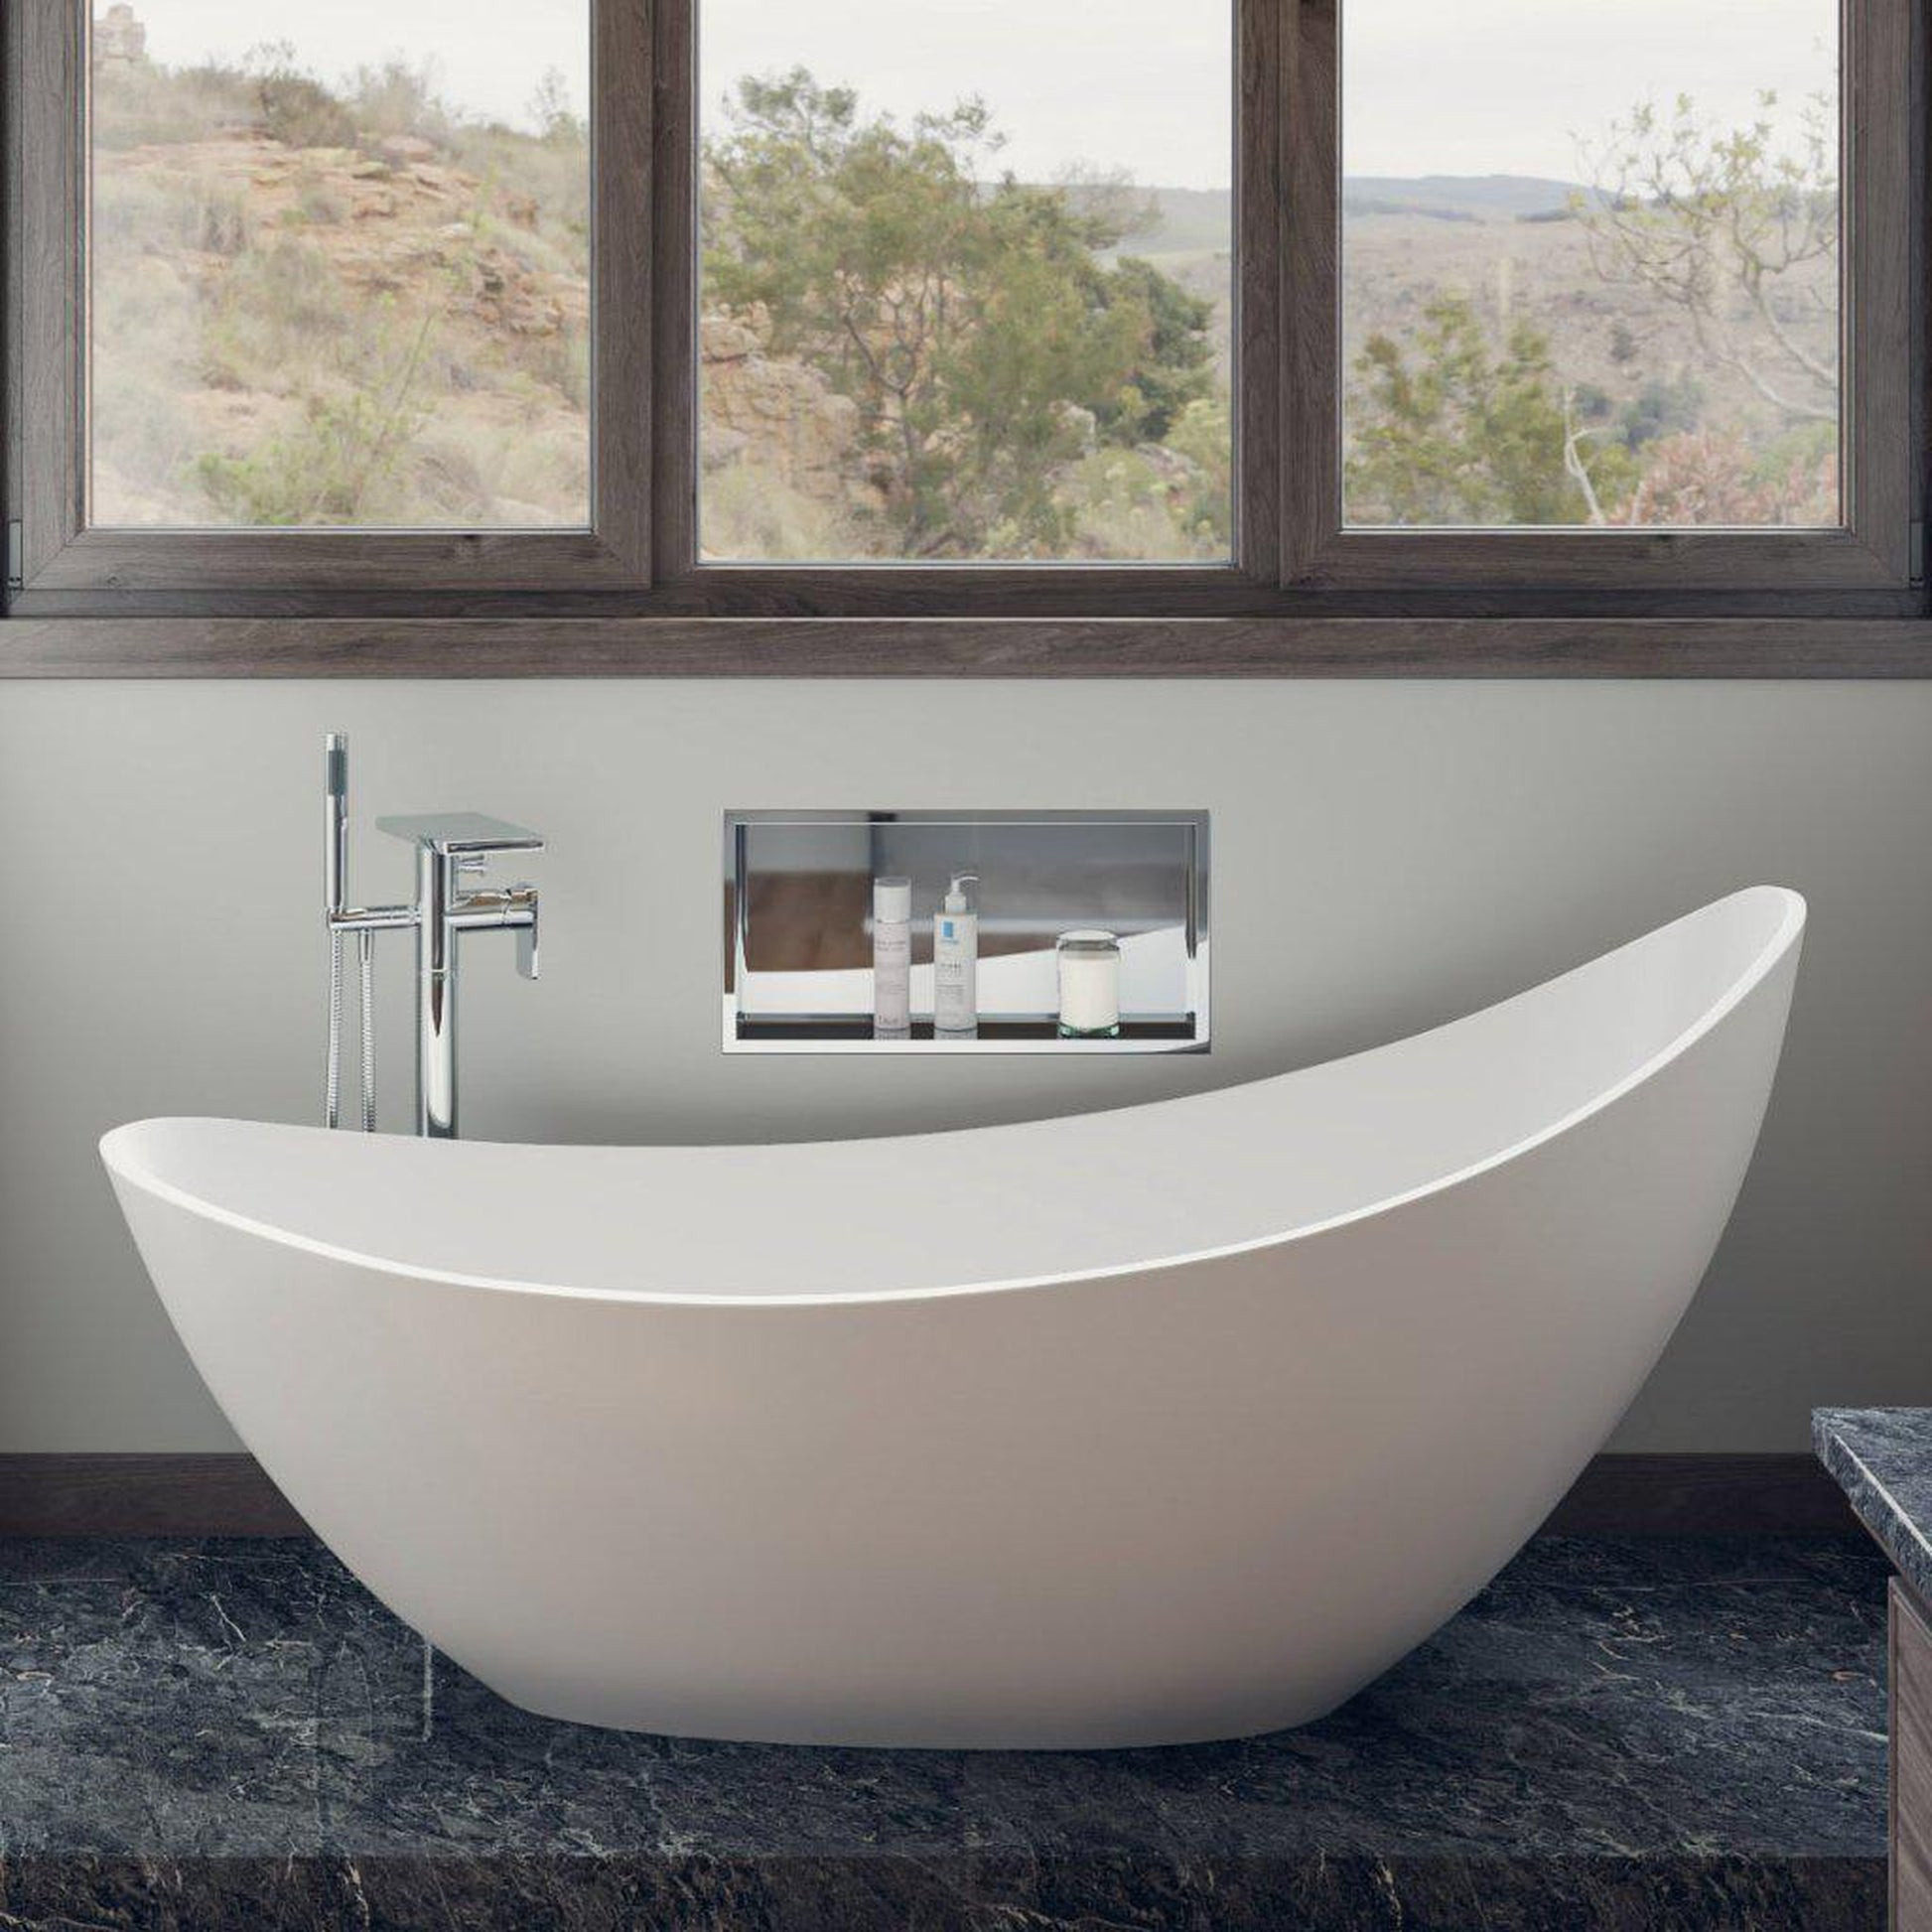 ALFI Brand AB2875-BN Brushed Nickel Freestanding Floor Mounted Bath Tub Filler With Hand Held Shower Head